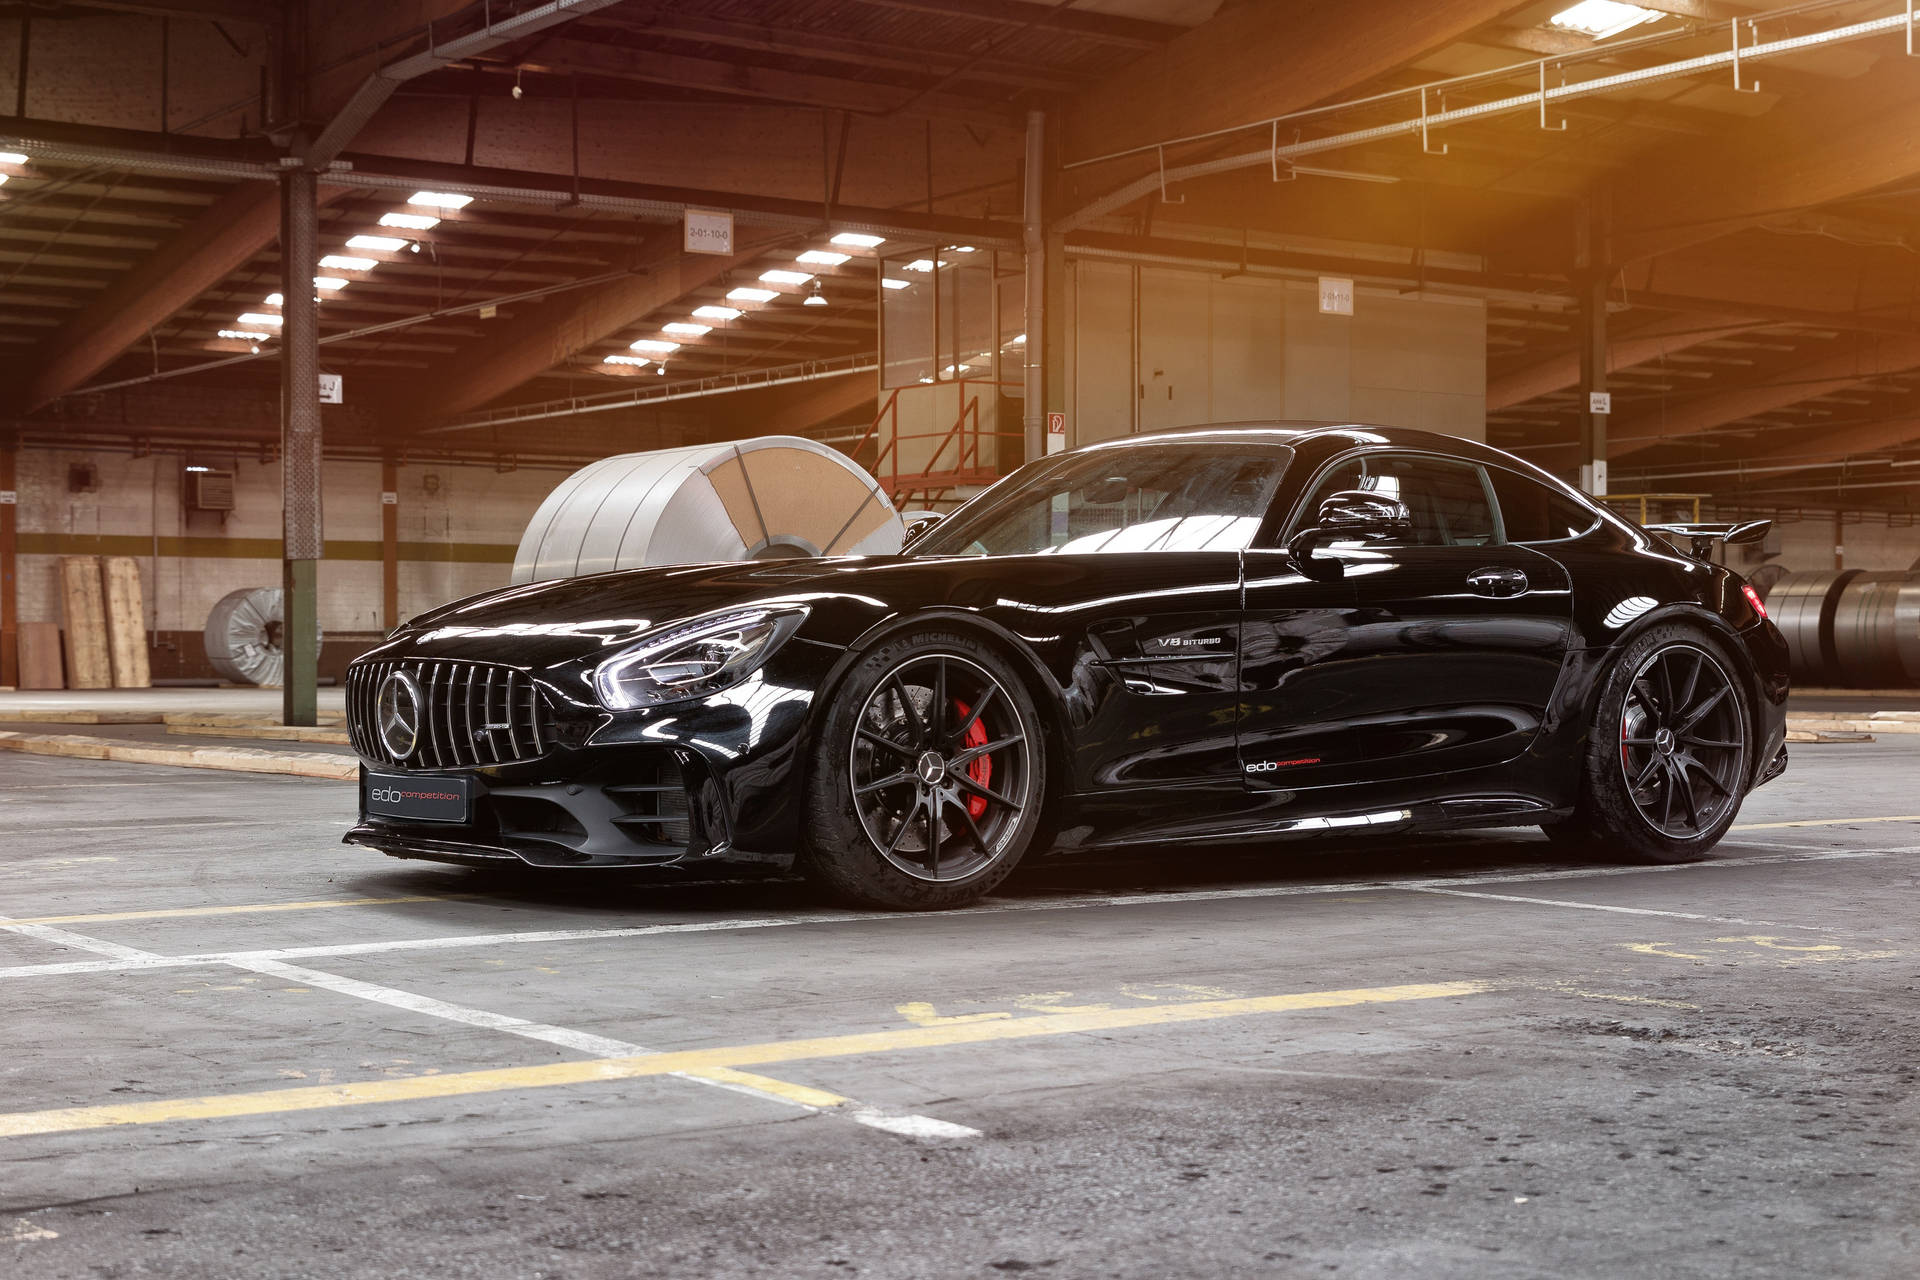 Caption: Majestic Black Mercedes Amg Gt R Showcasing Power And Elegance Background